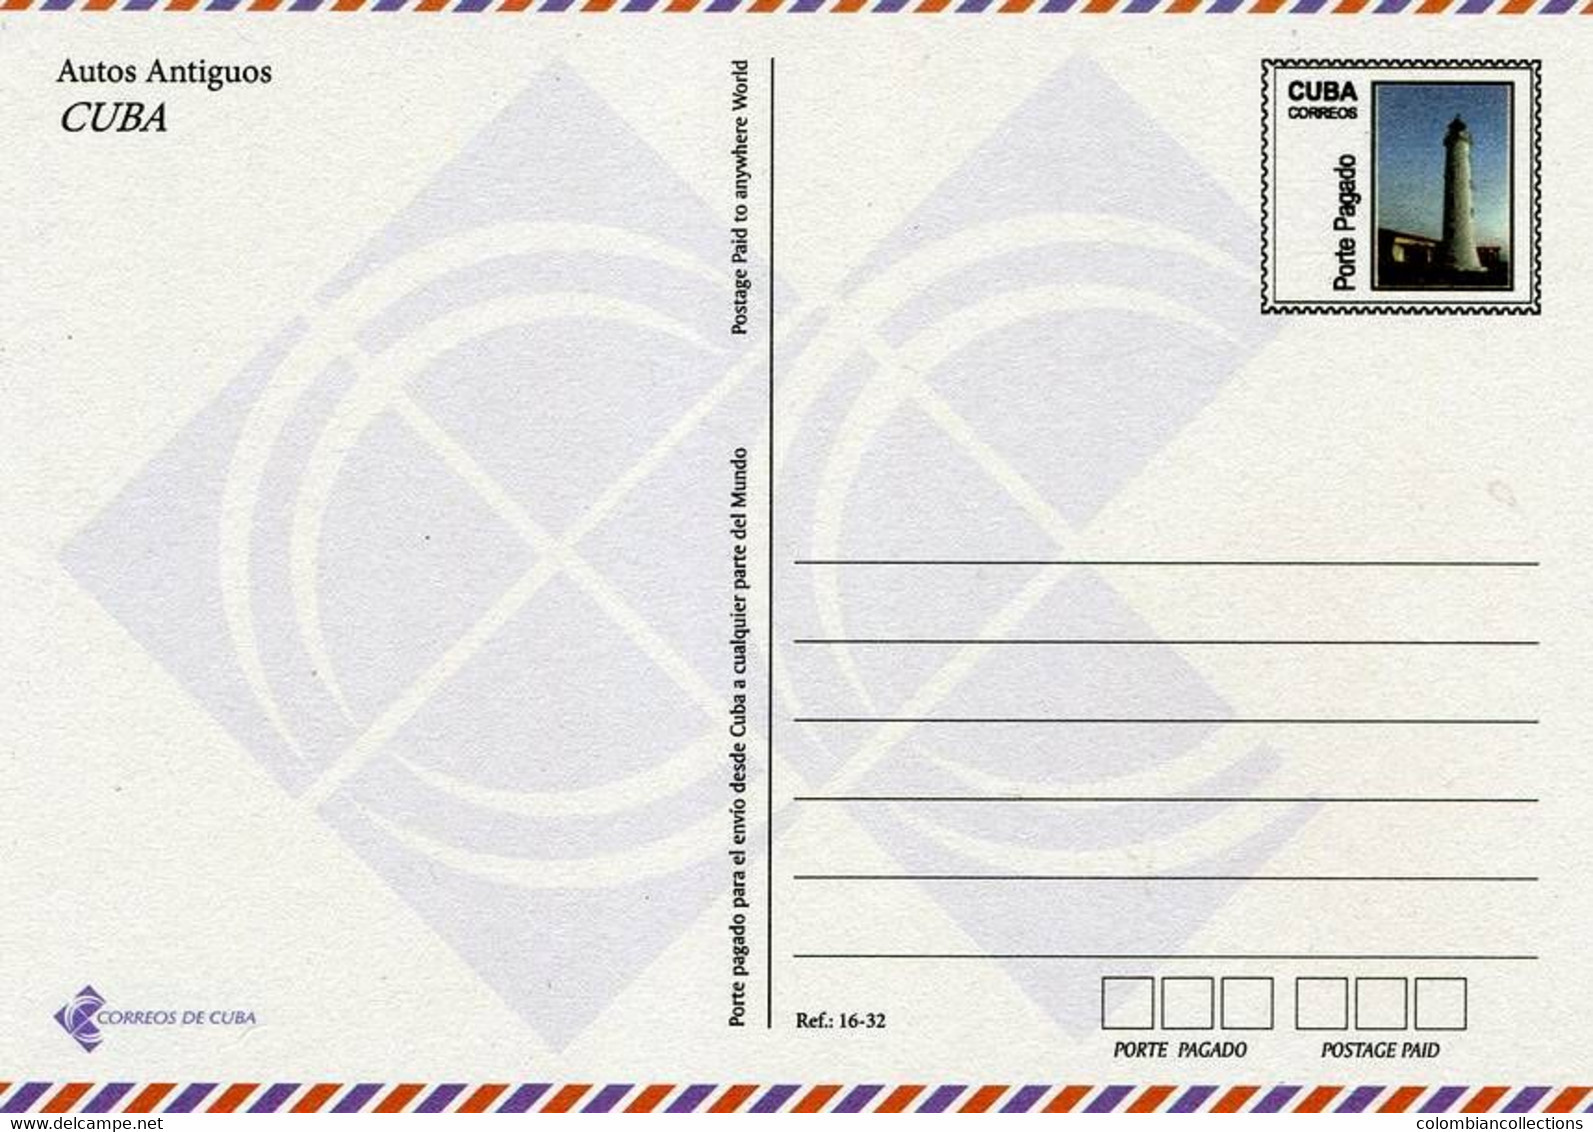 Lote PEP963a, Cuba, 2013, Entero Postal, Postal Stationary, Autos Antiguos, 16/32, Postcard. Che Guevara - Maximumkaarten